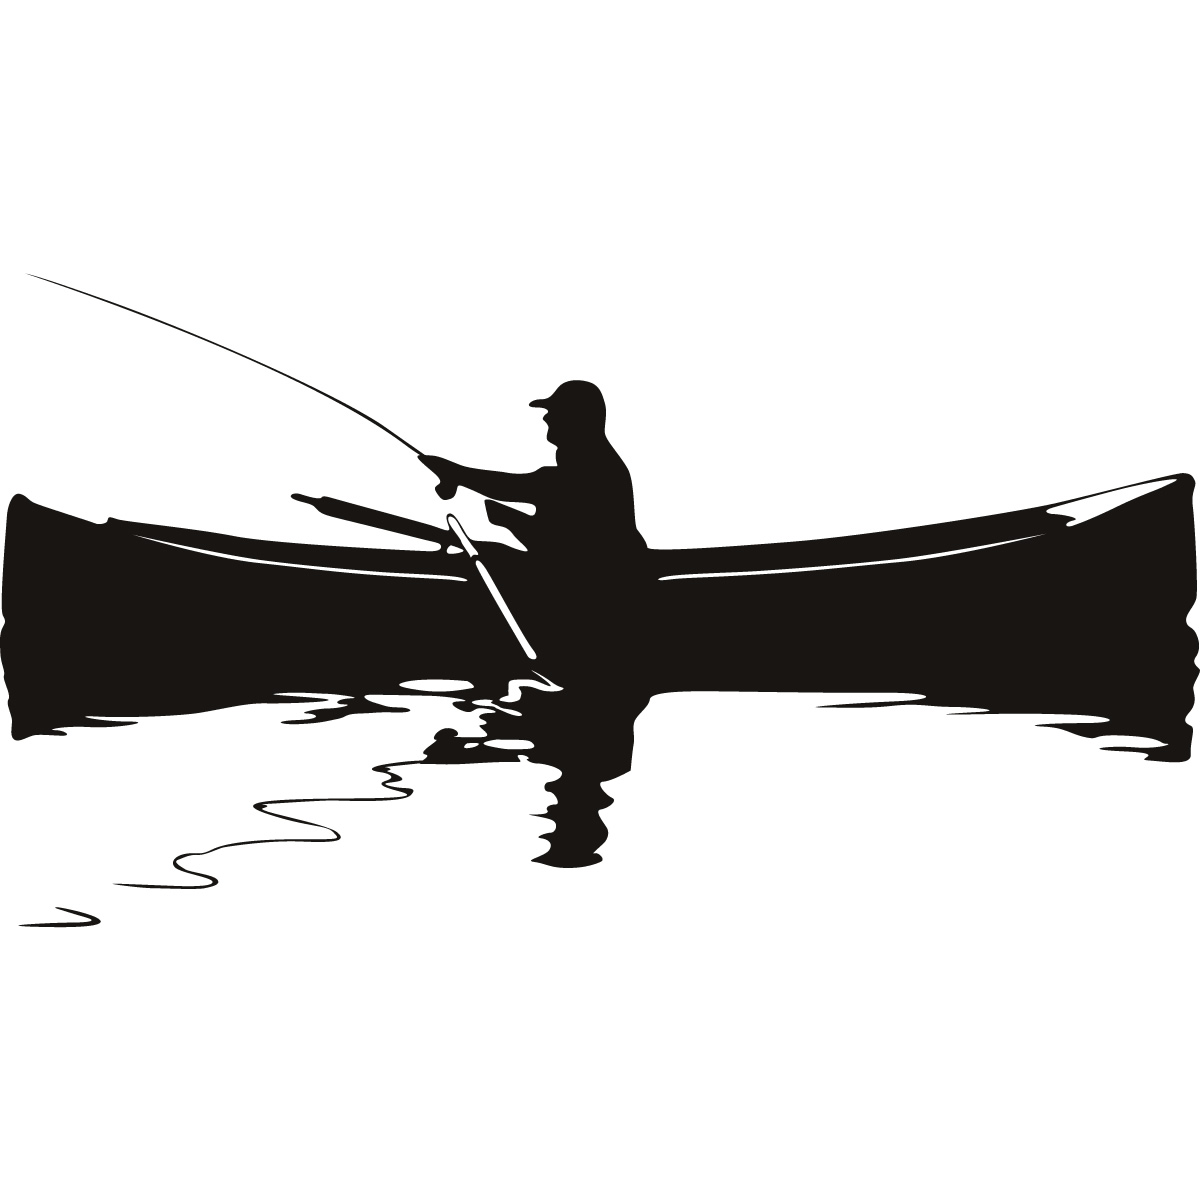 Man Boat Fishing Sports And Hobbies Wall Art Stickers Transfers   Ebay